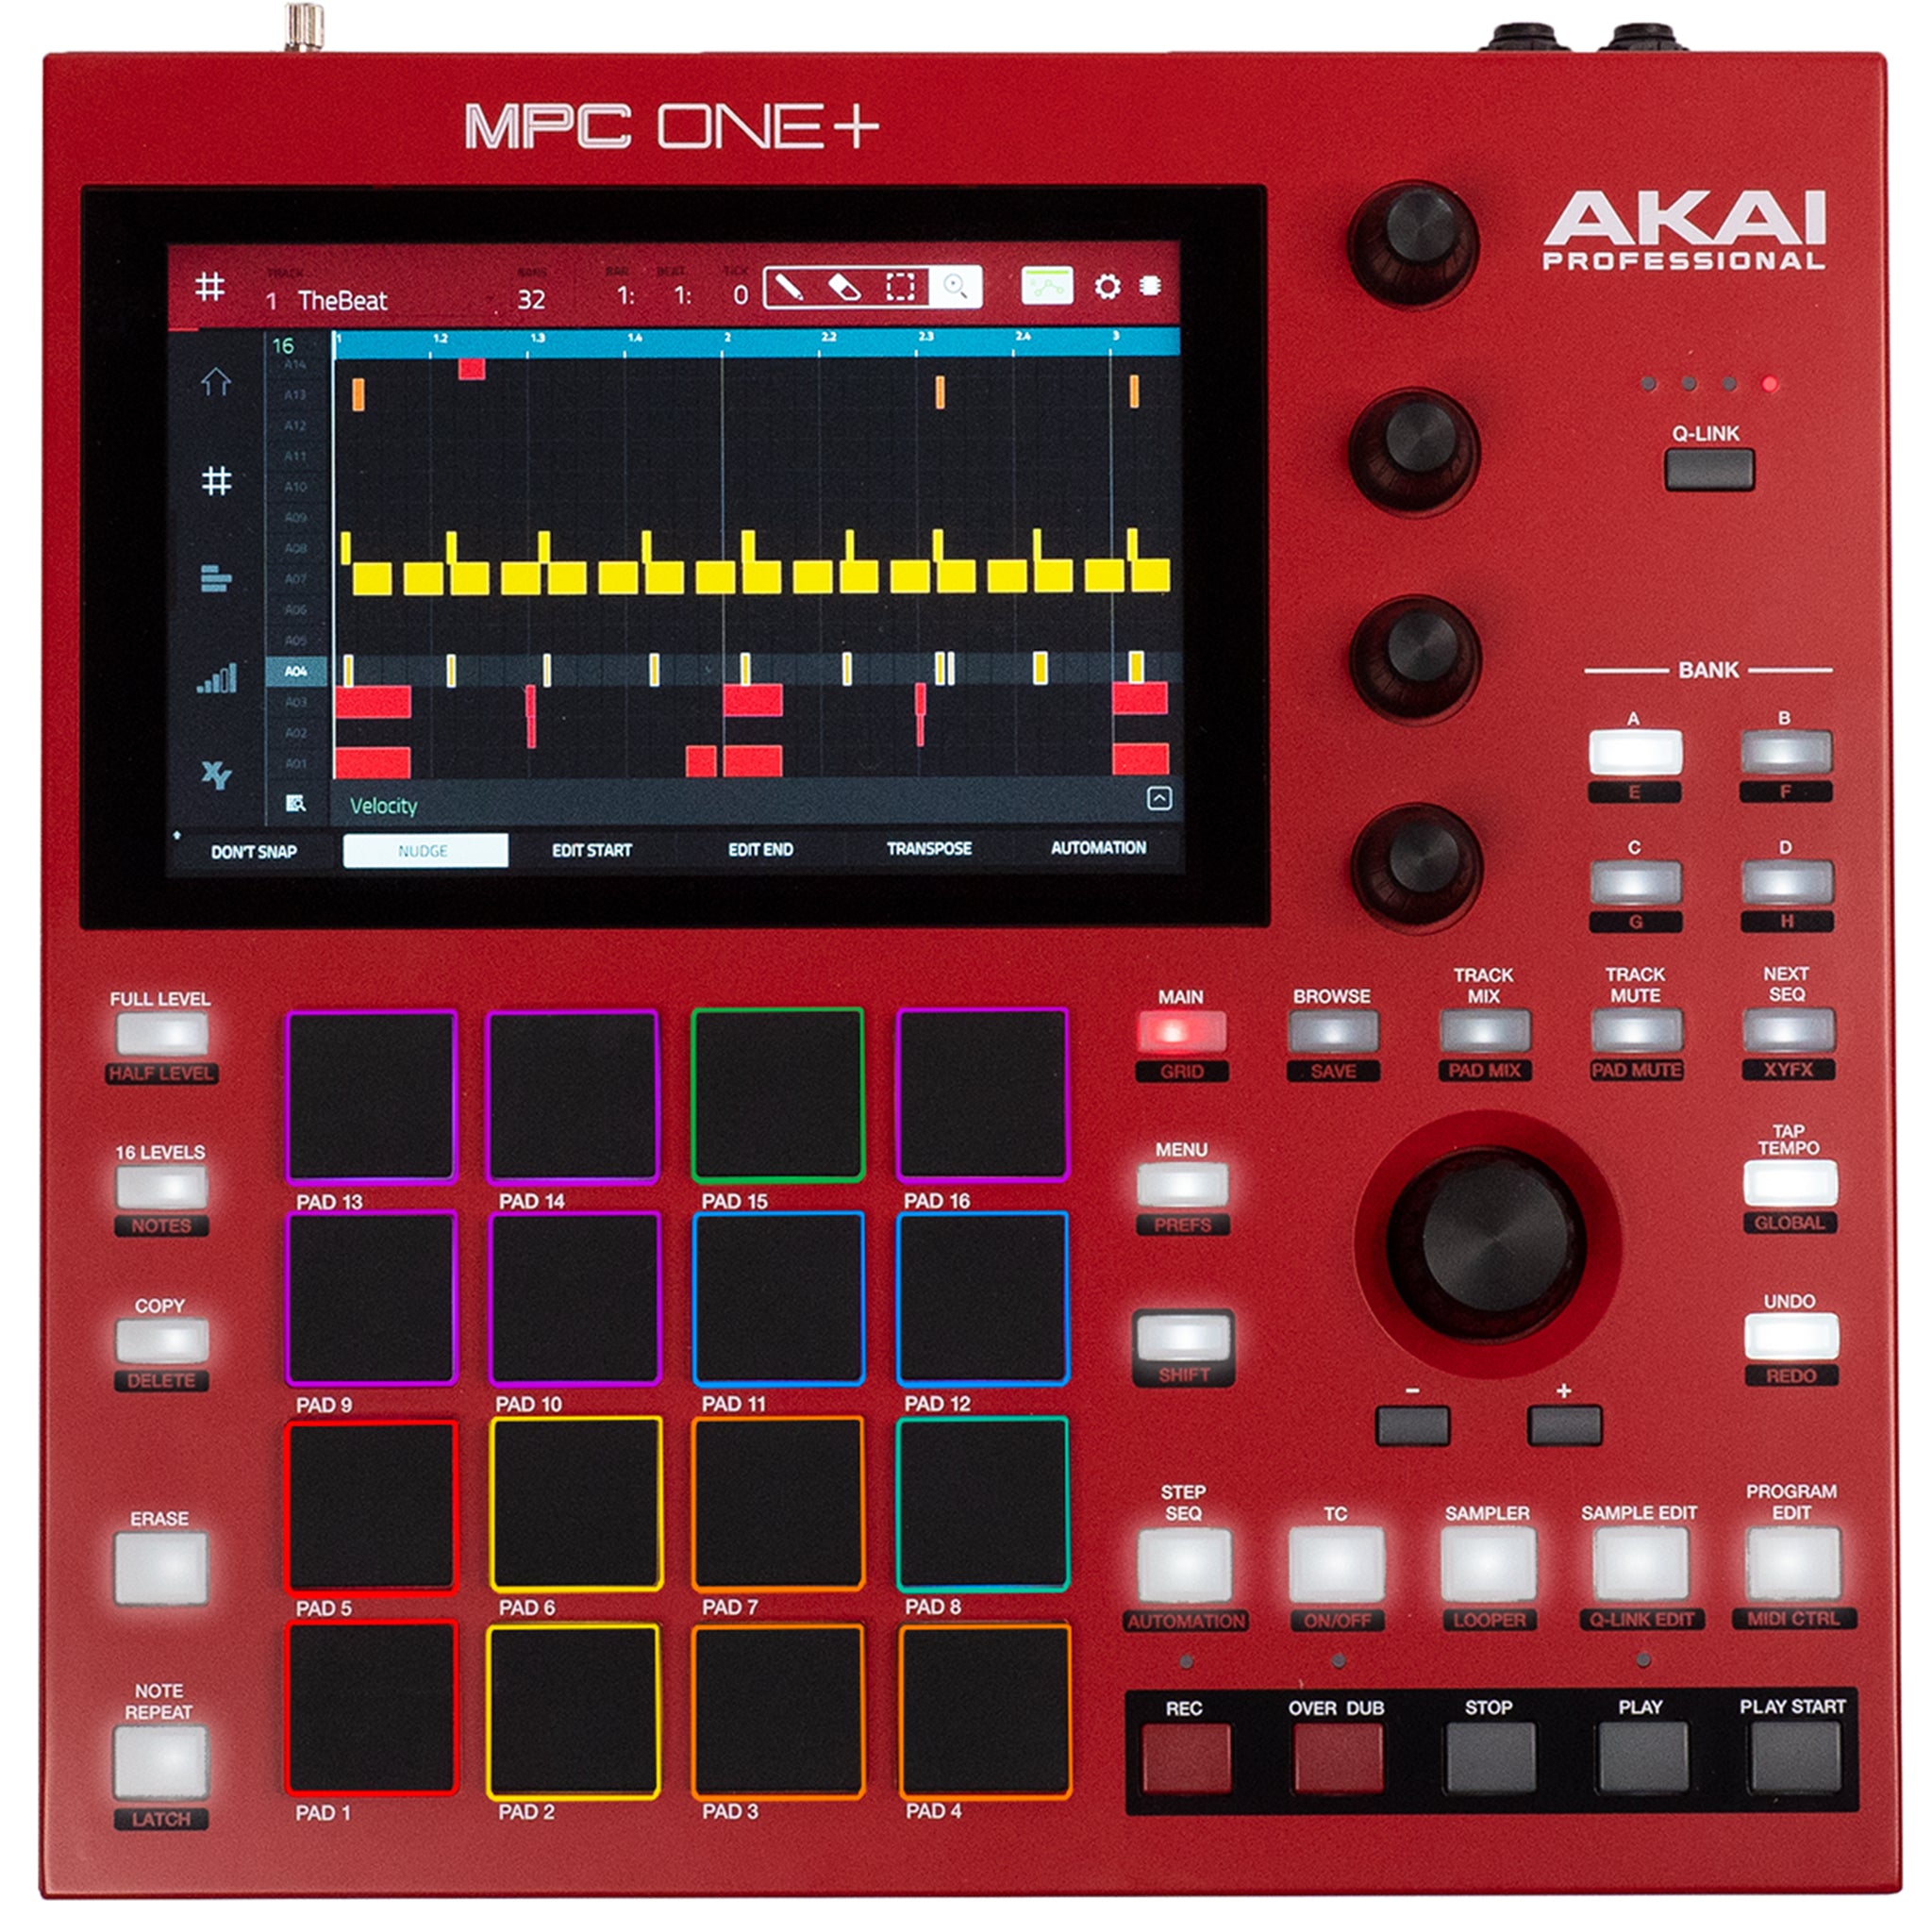 Akai MPC Renaissance – The Little MIDI Store